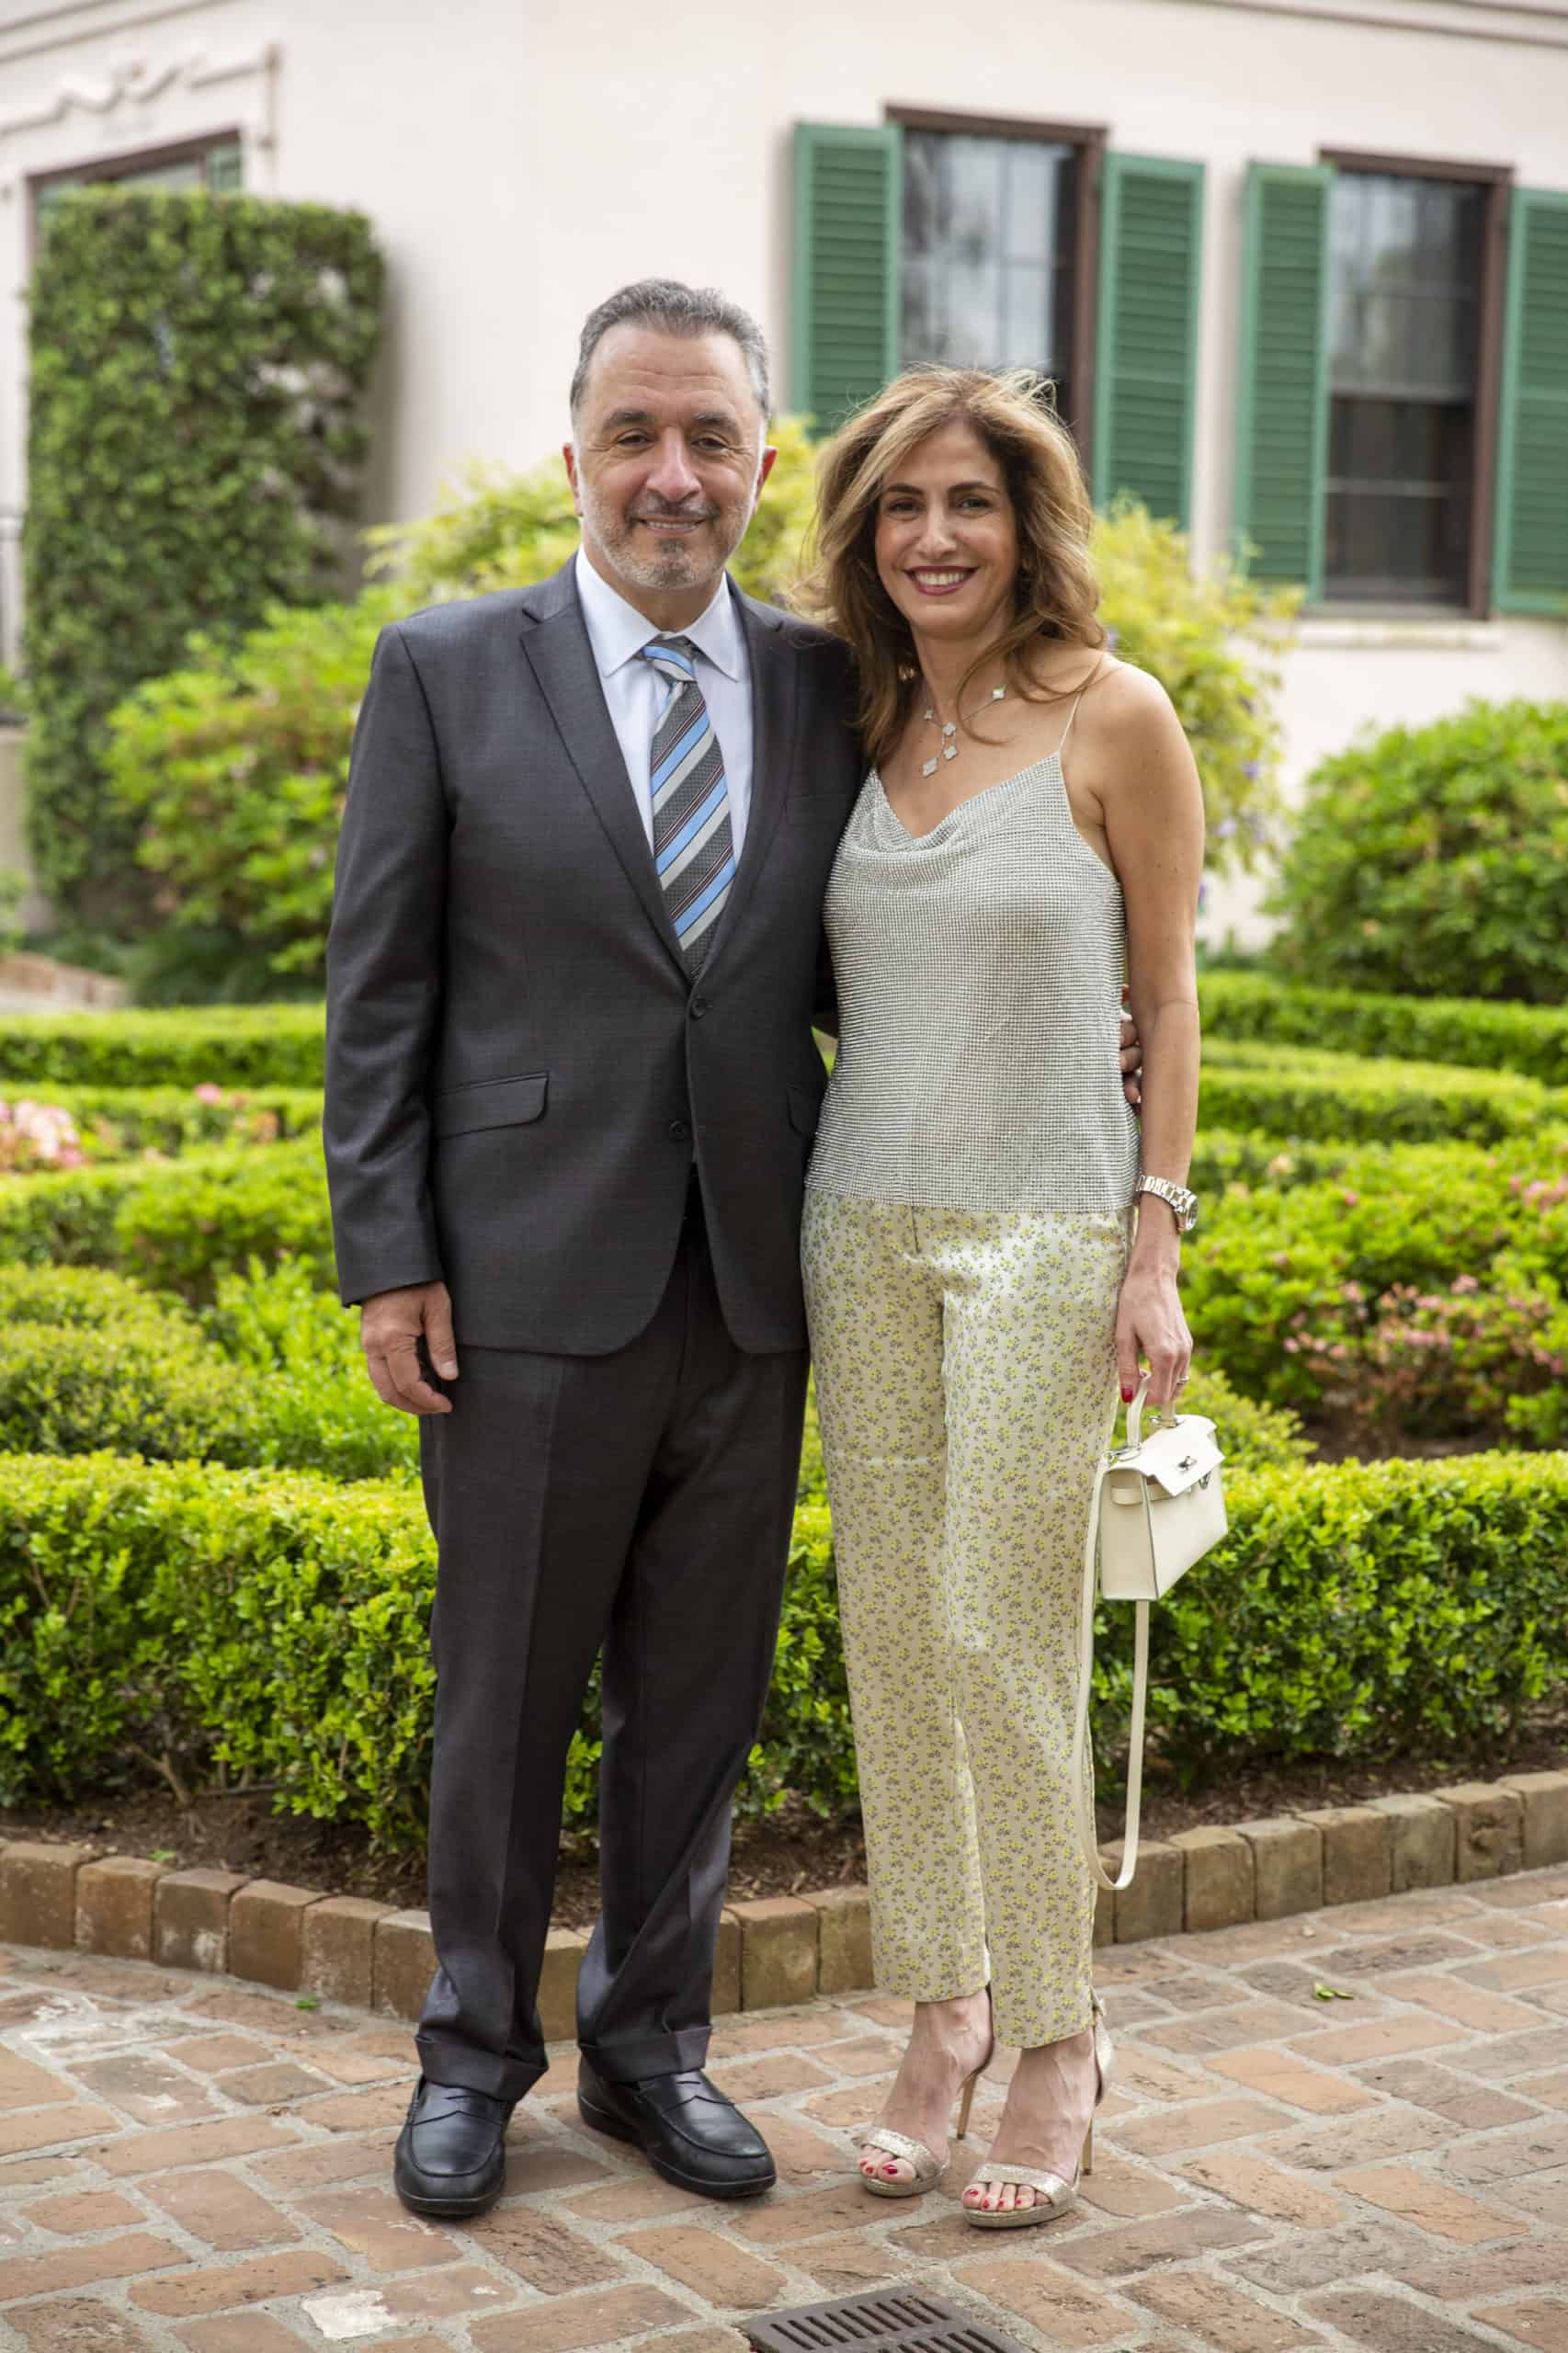 Masoud and Sima Ladjevardian